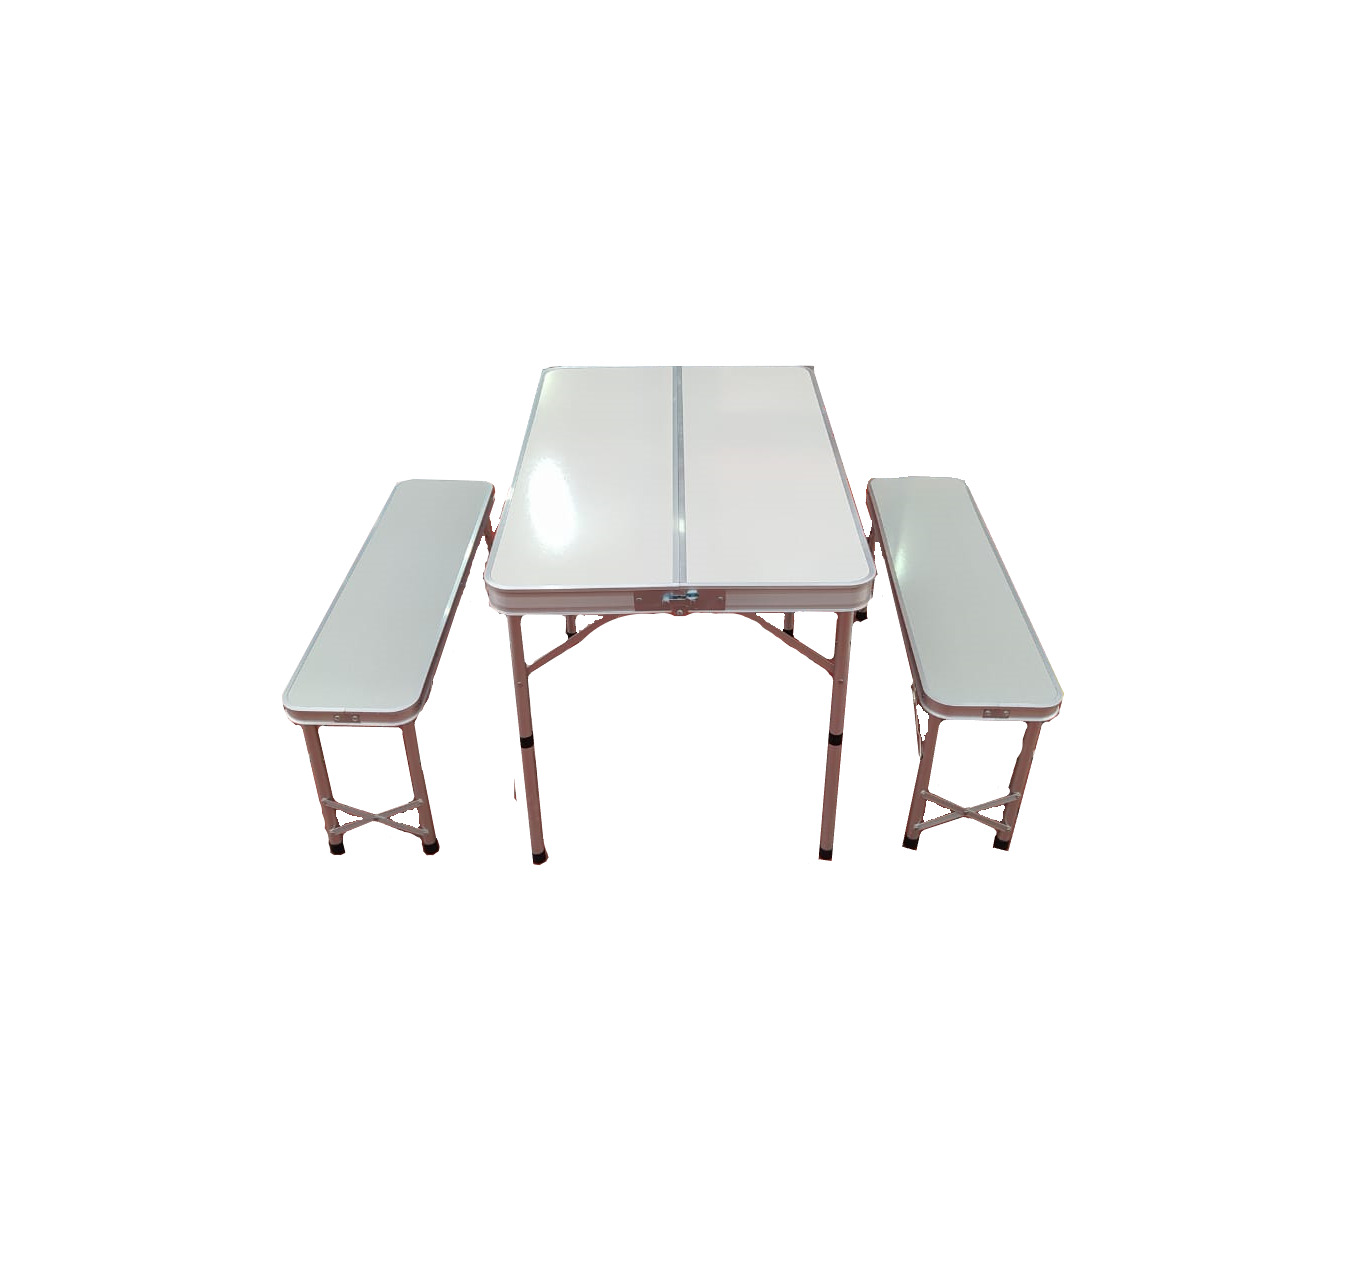 Складной стол со скамейками Mimir ch007